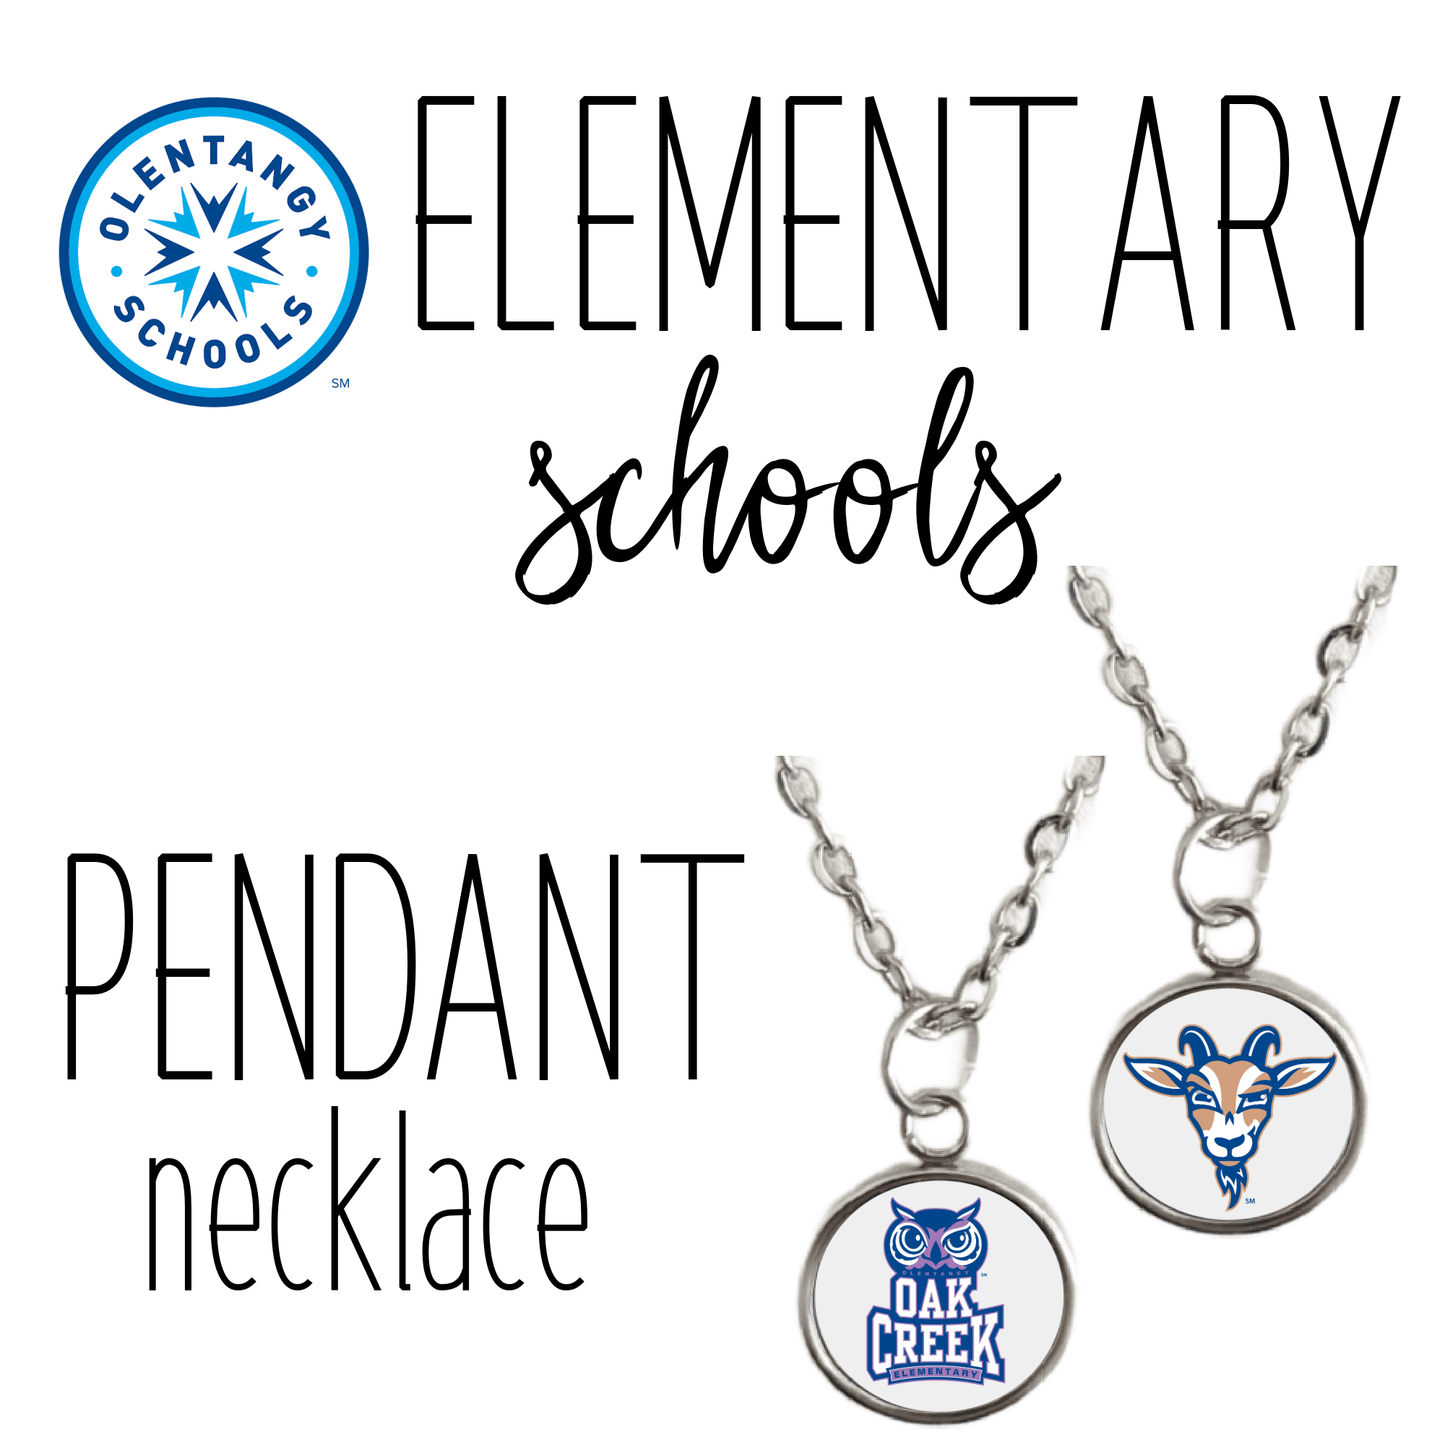 Olentangy - ELEMENTARY SCHOOLS silver pendant necklace